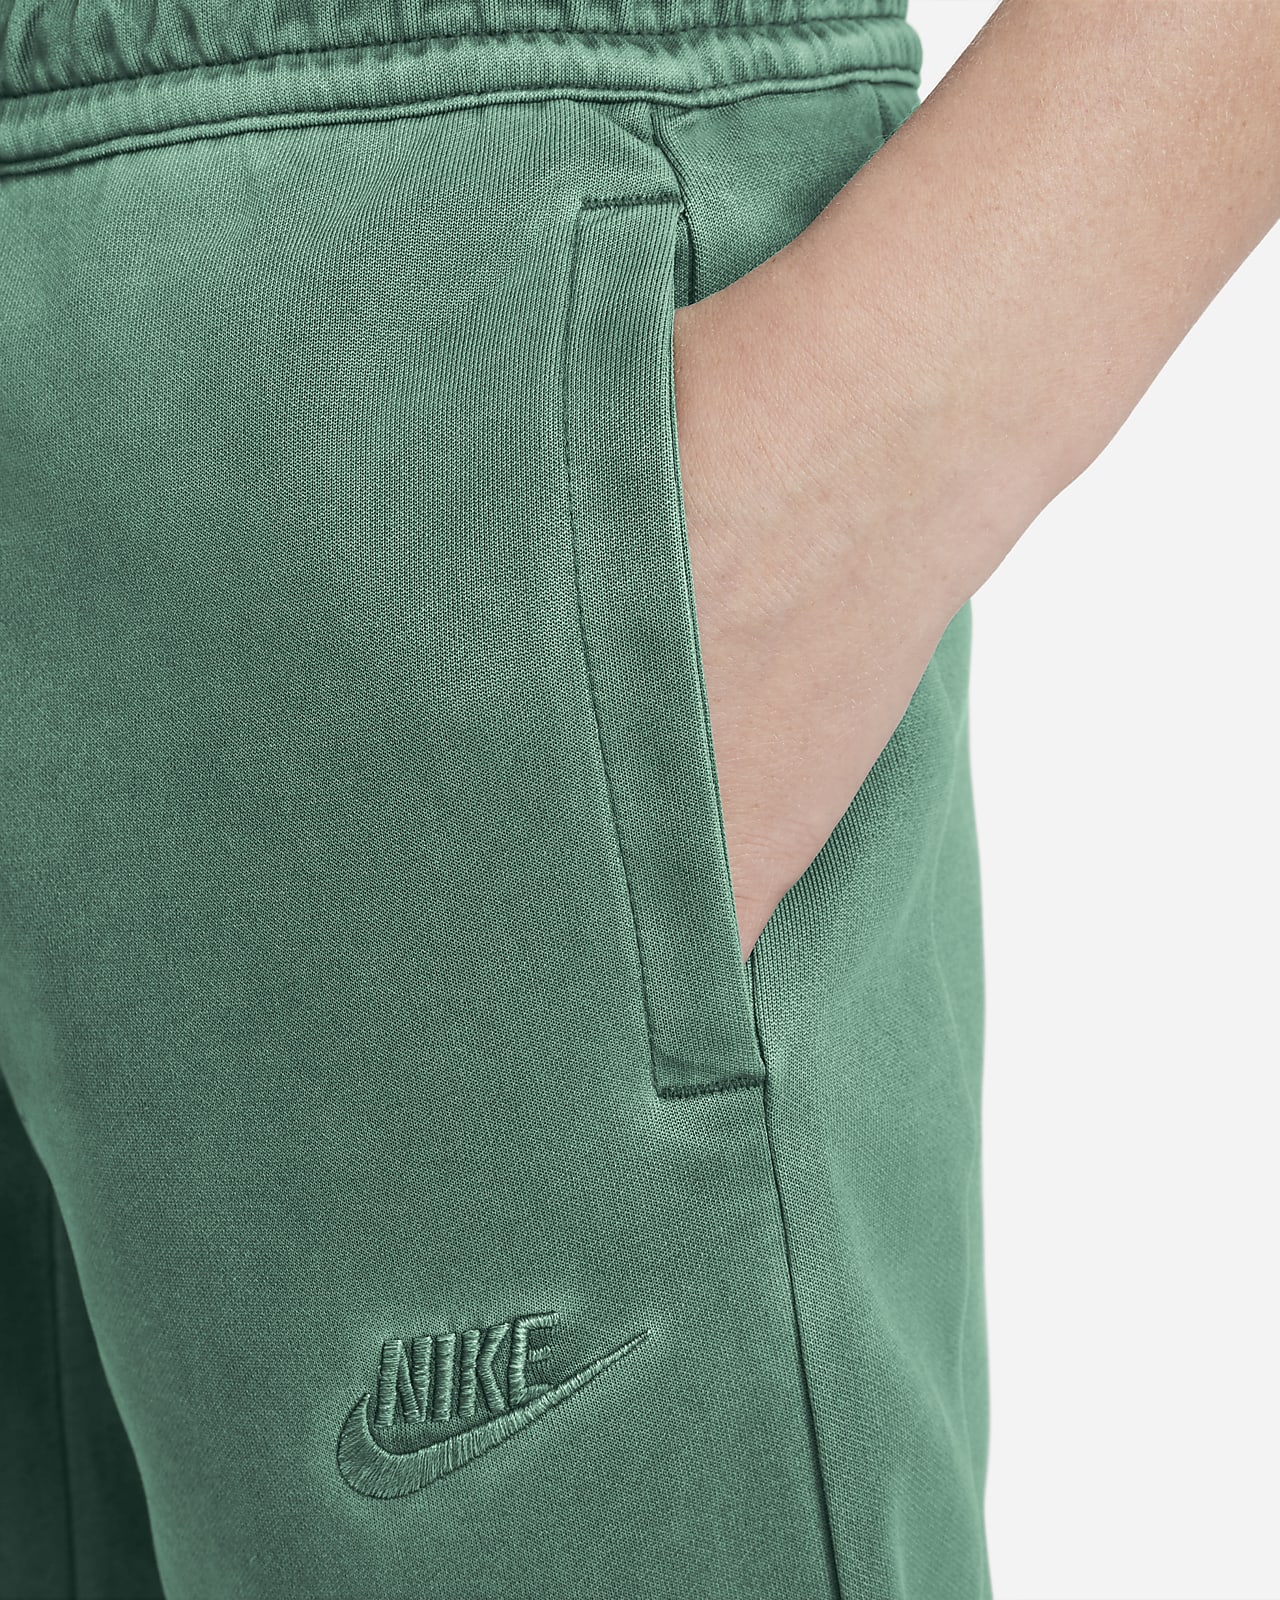 Nike Sportswear Essentials Collection Fleece Green Jade Relaxed Pants XL  NEW